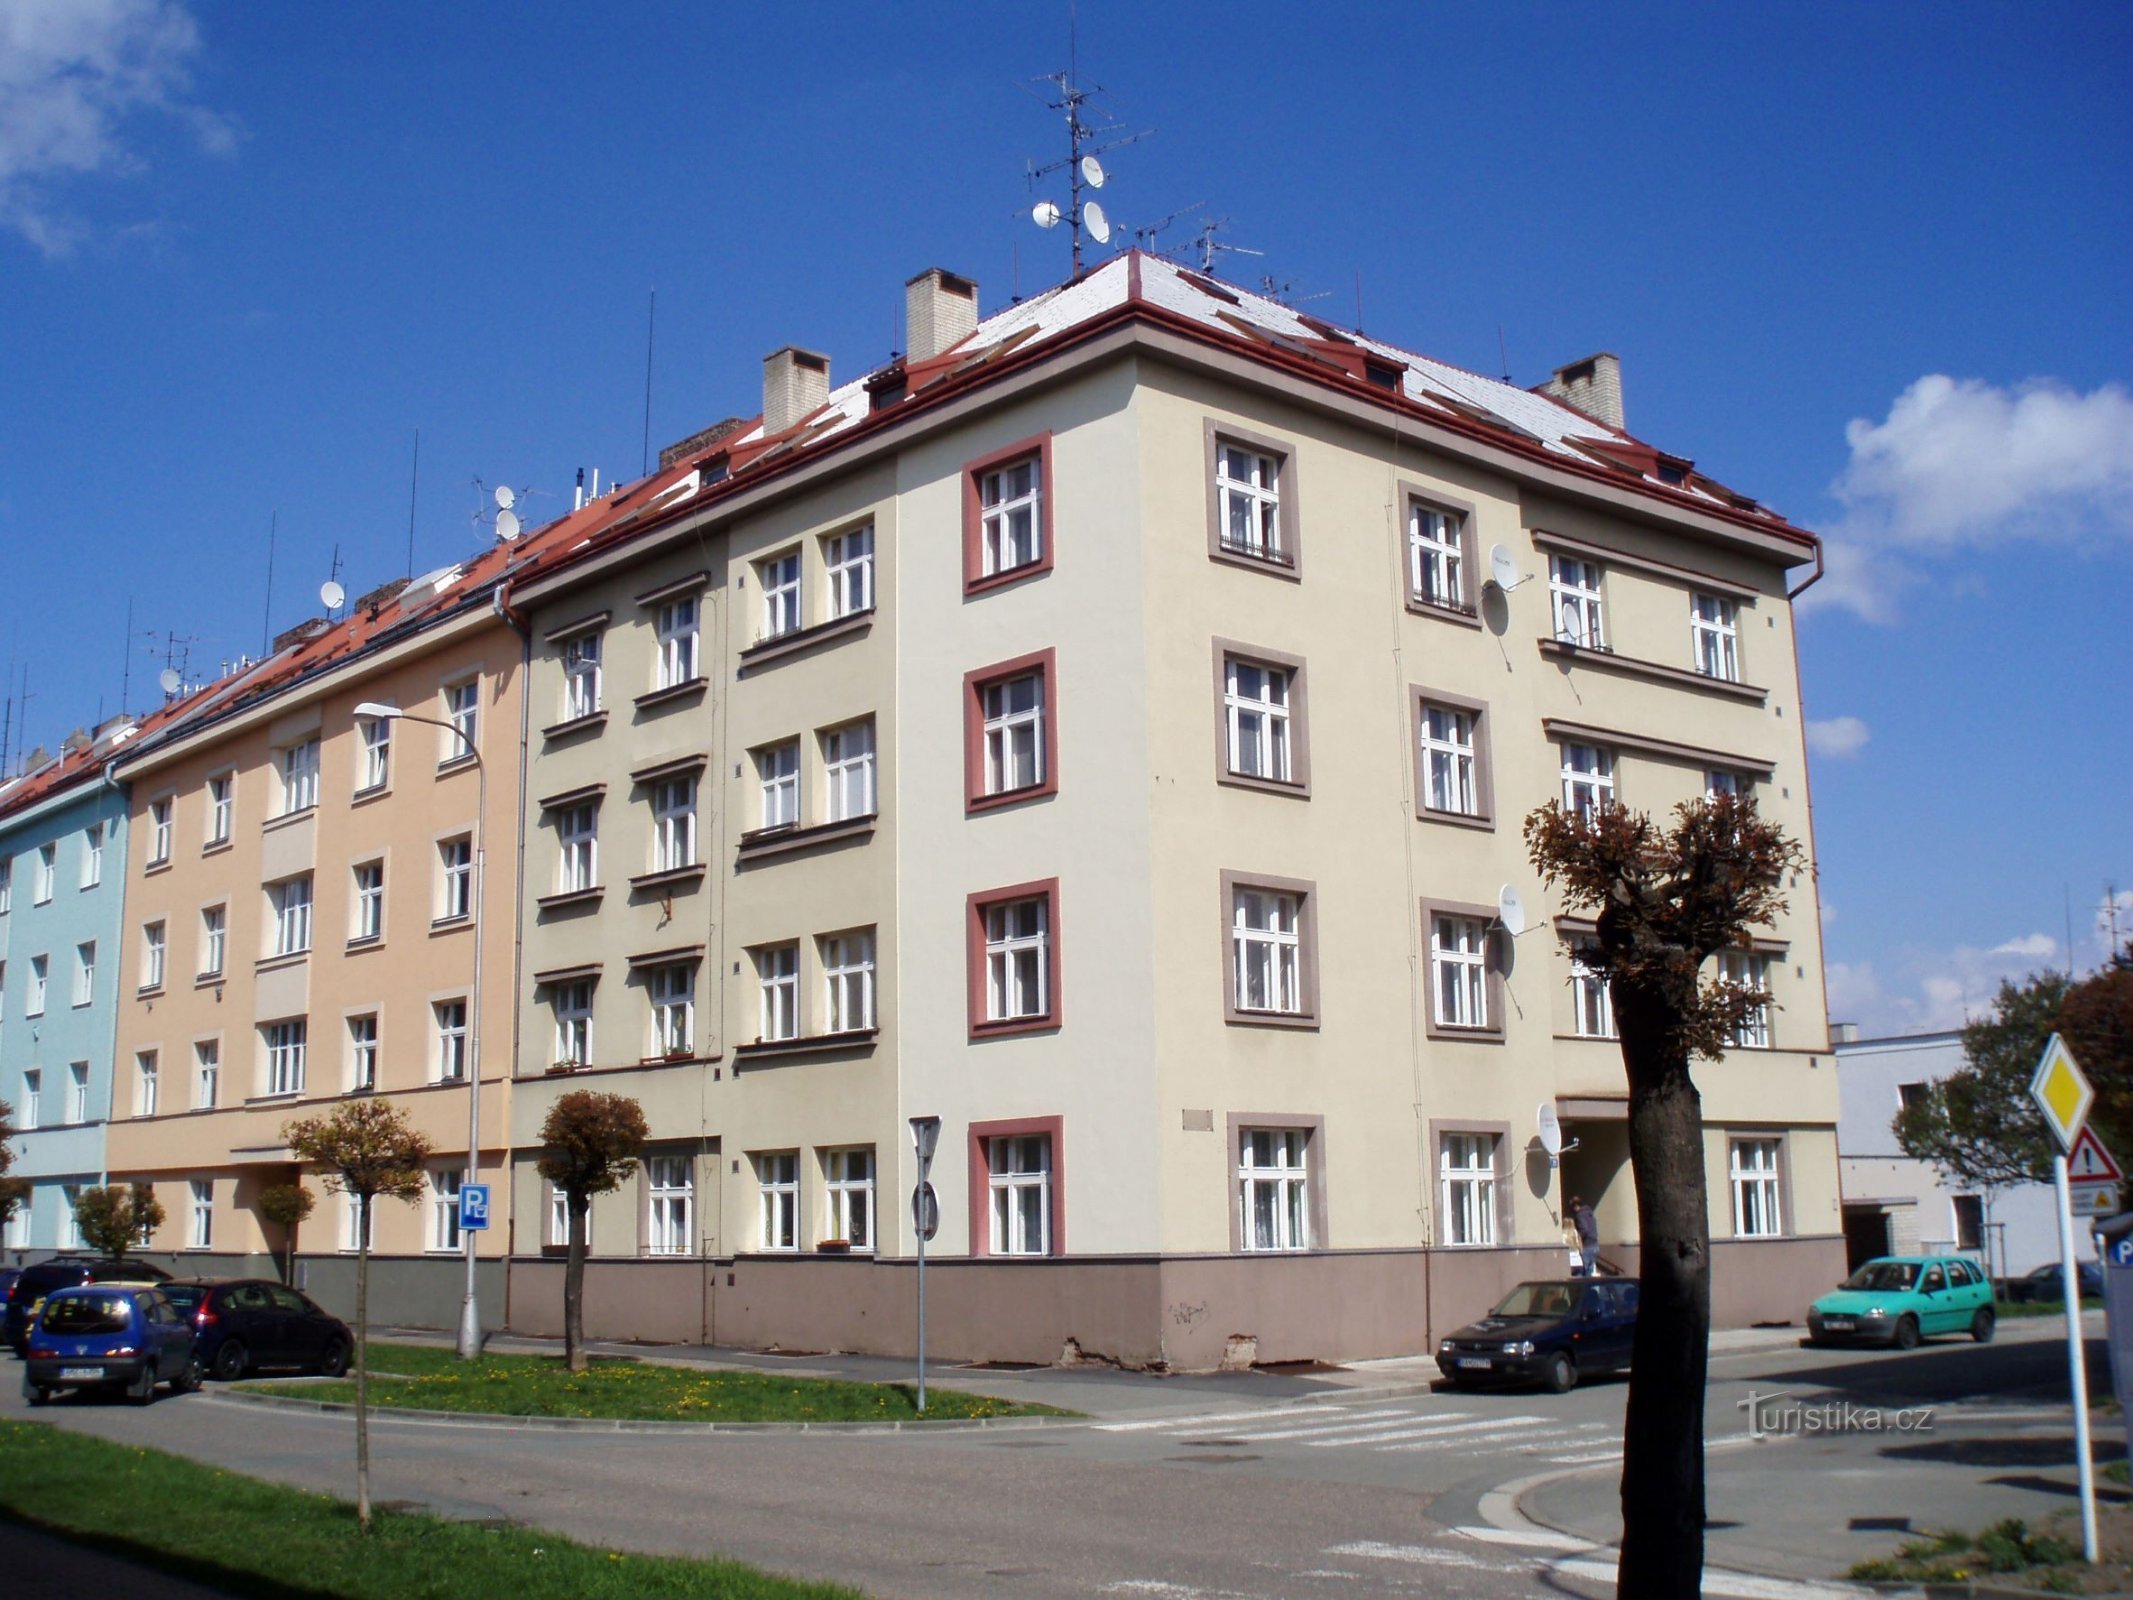 Albertova nr. 826 (Hradec Králové, 21.4.2012 april XNUMX)